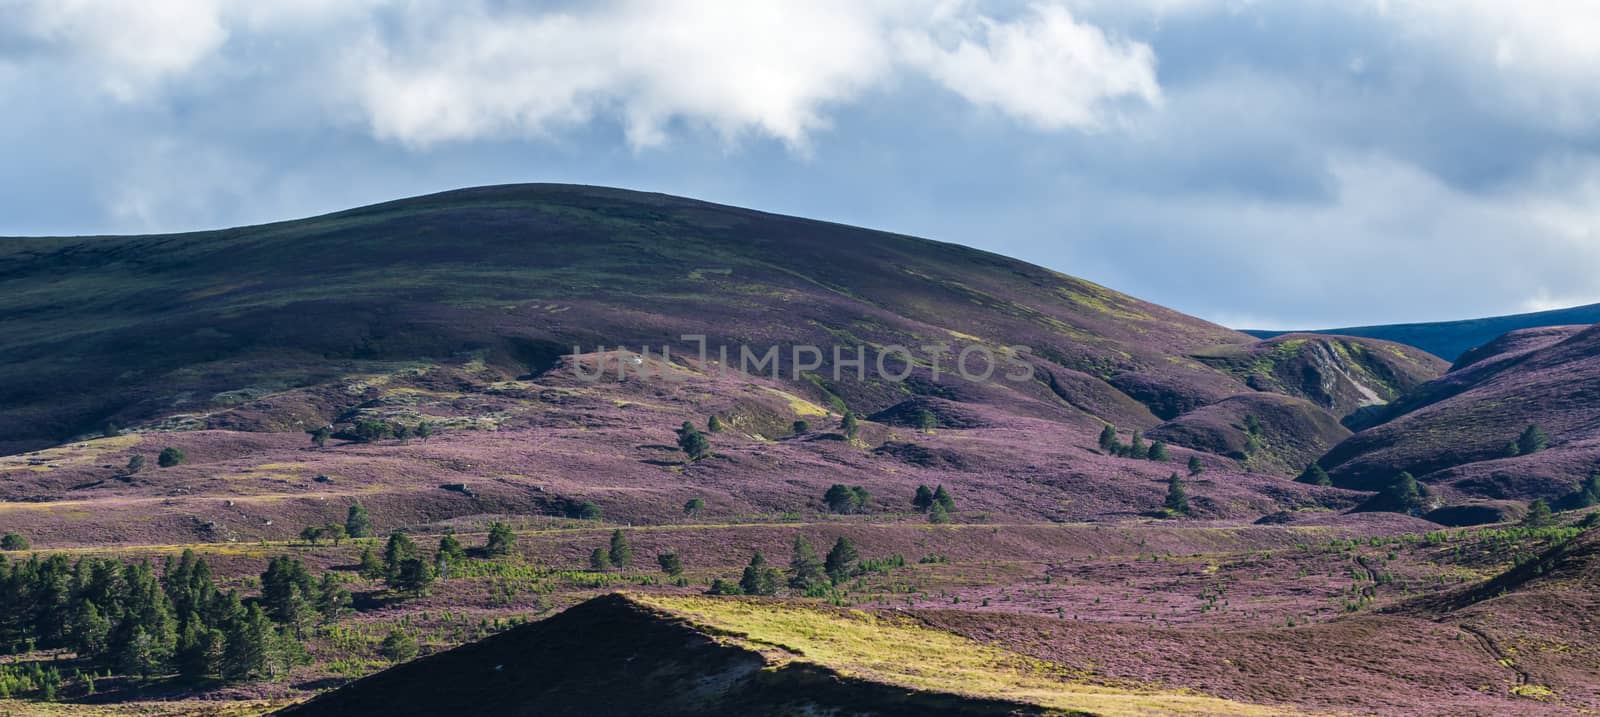 Heather on the Cairngorm Mountain Range by phil_bird